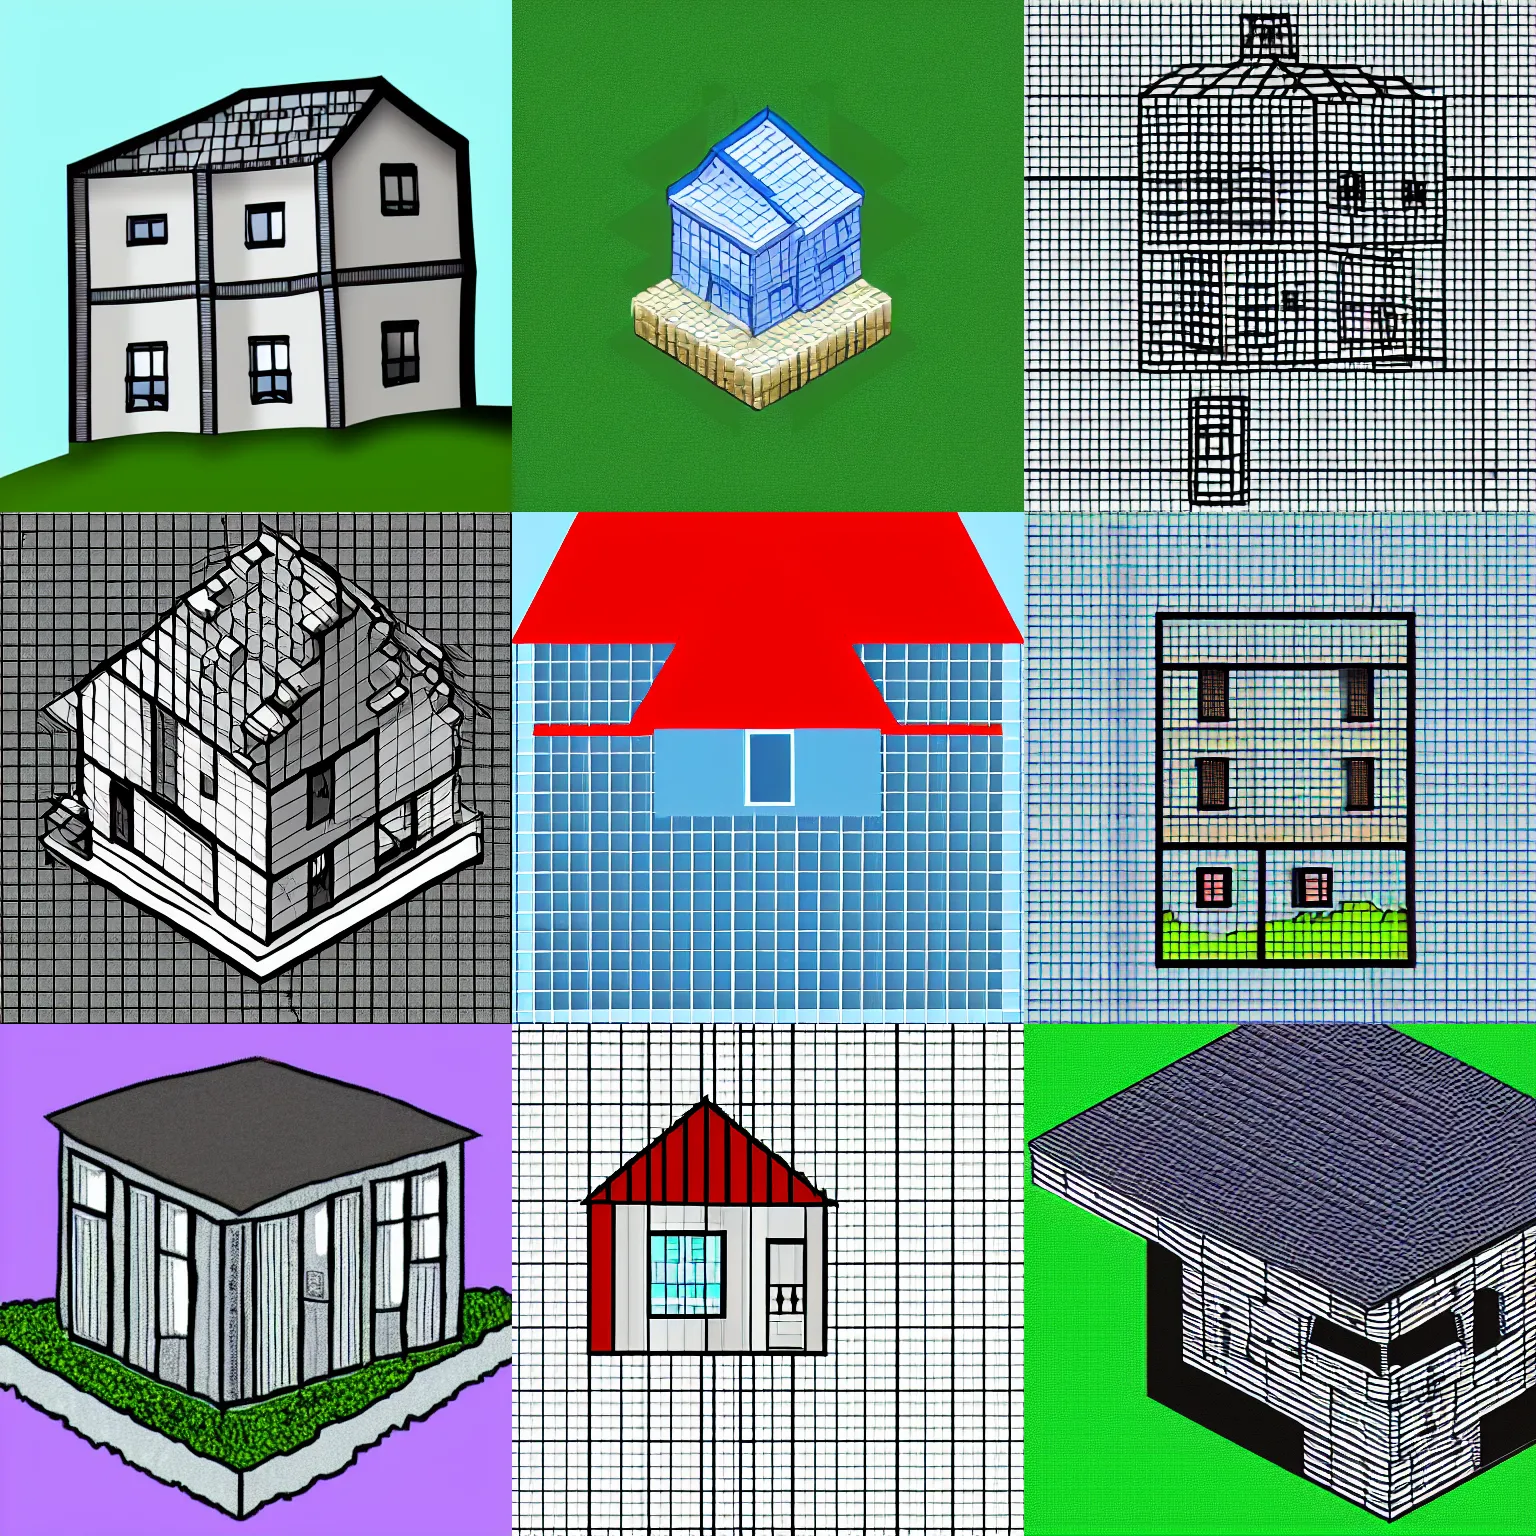 Create an Isometric Pixel Art House in Adobe Photoshop